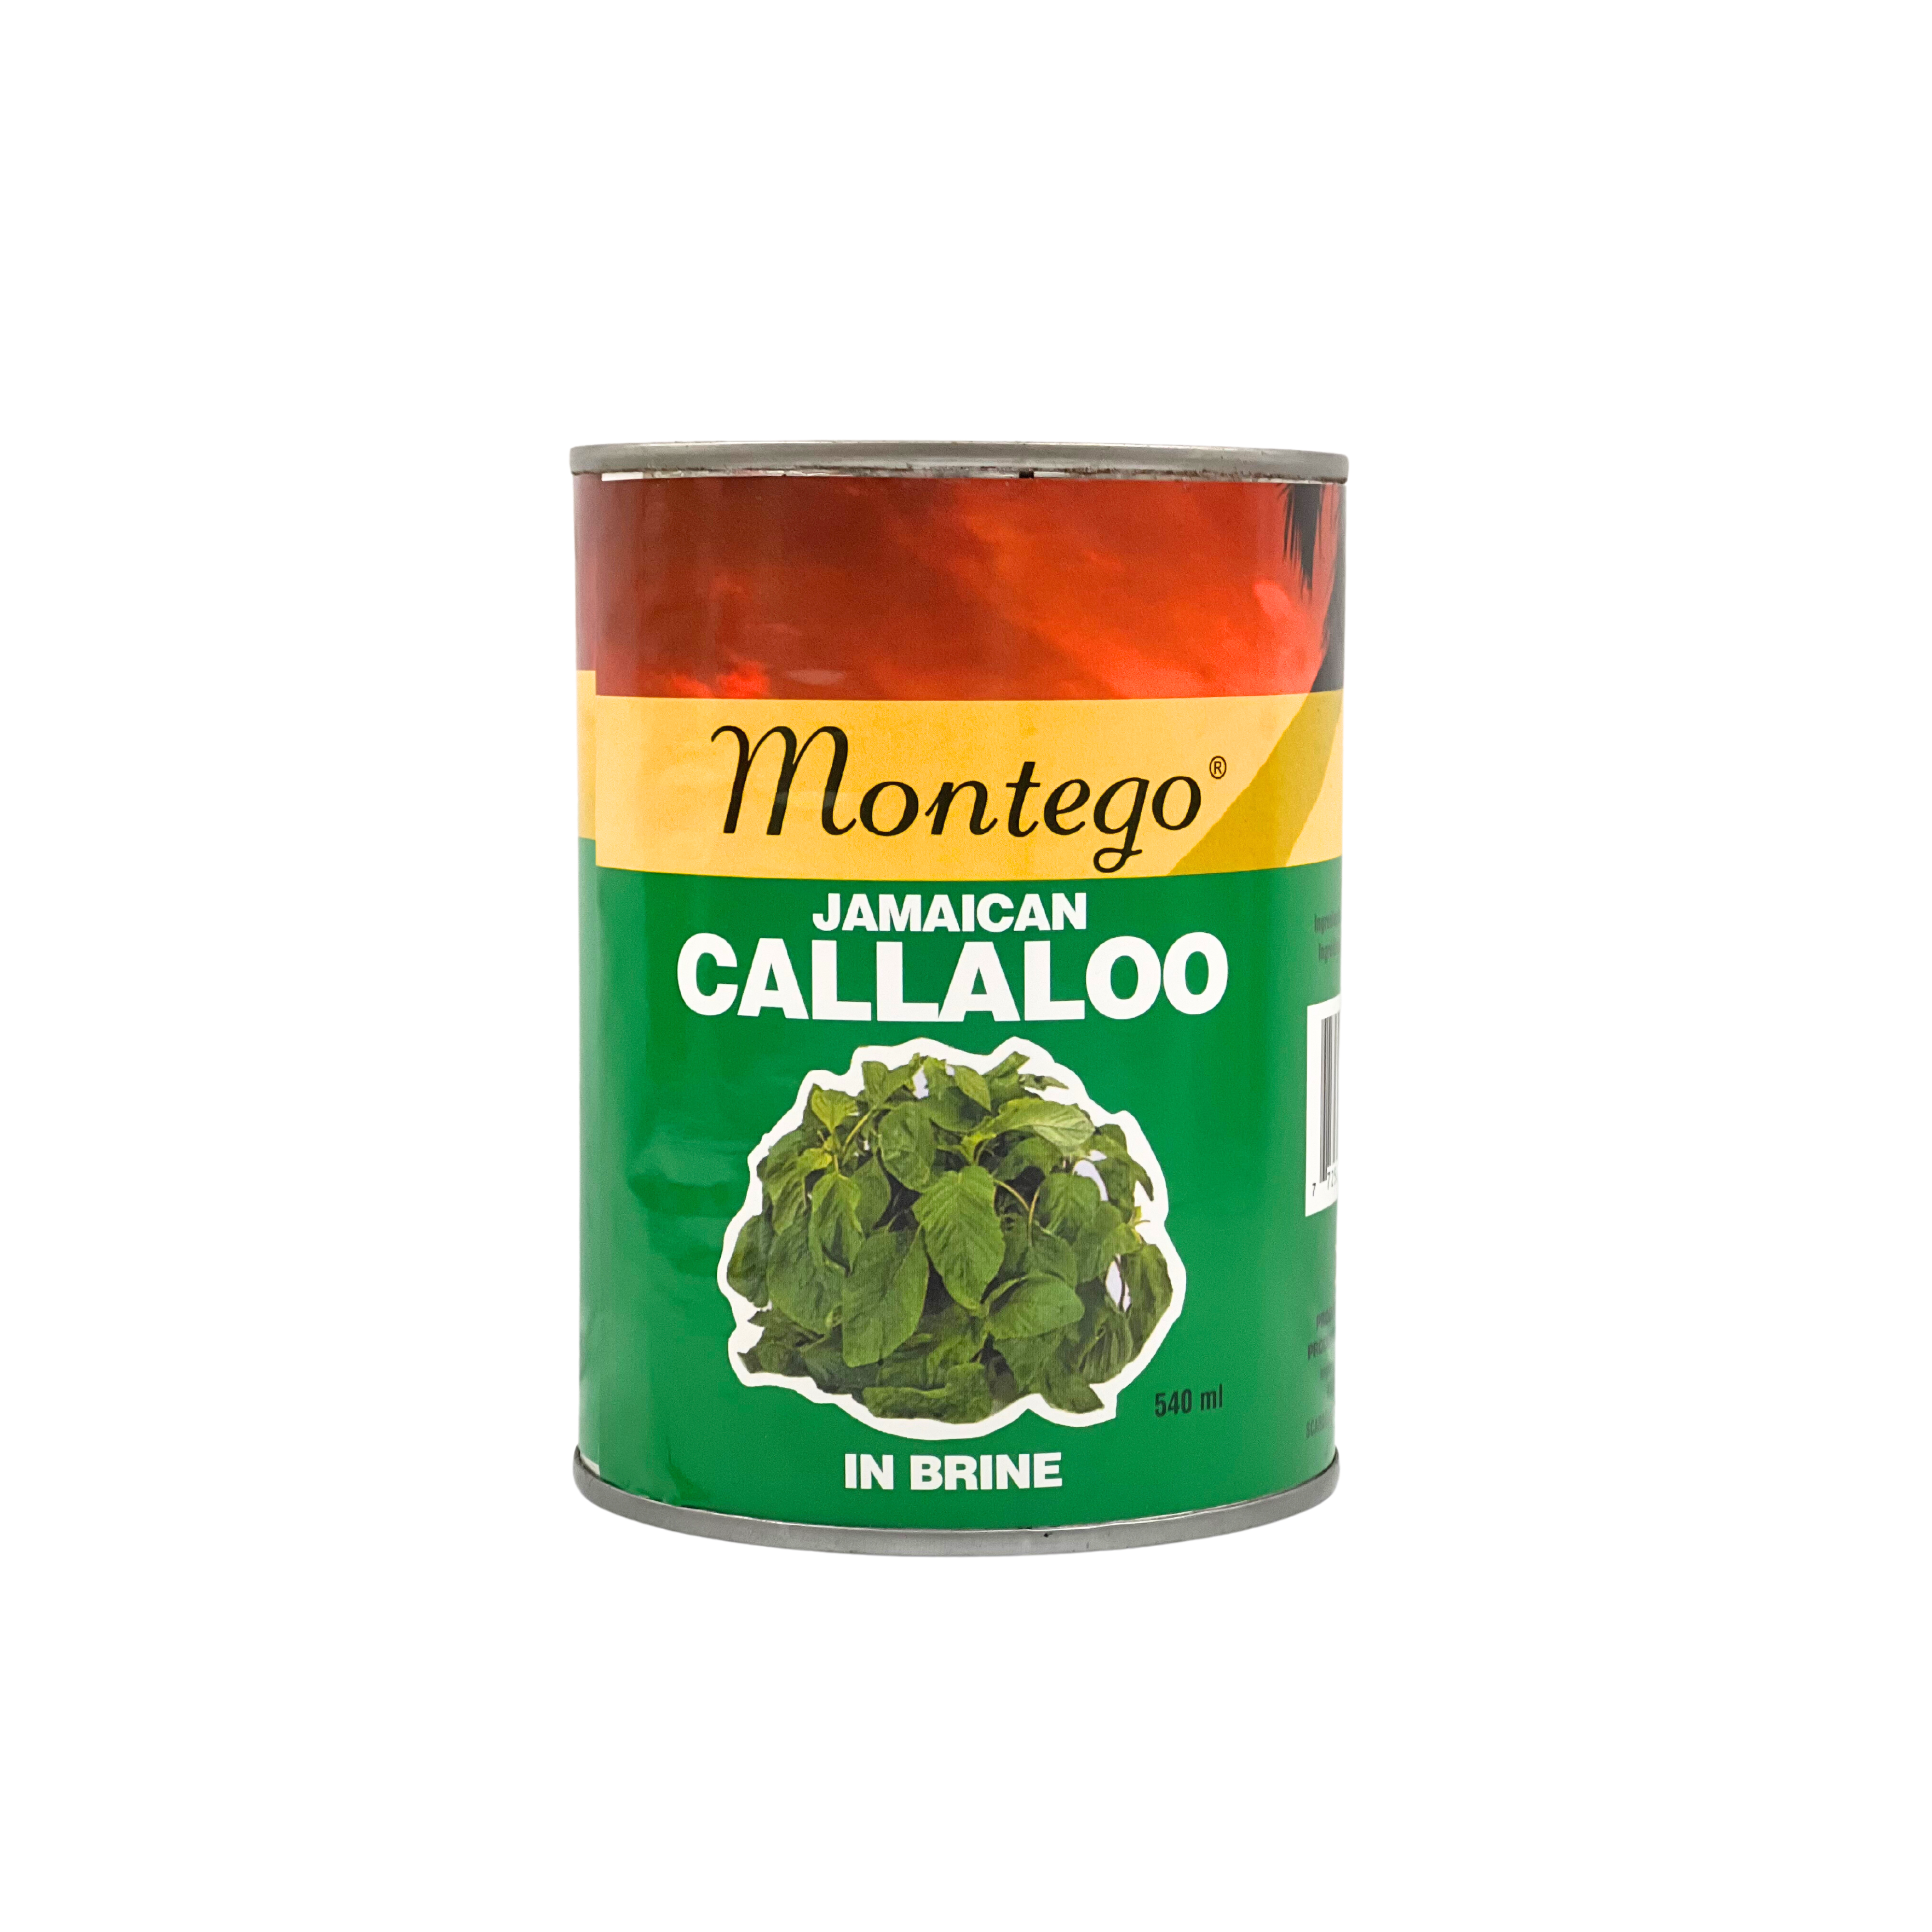 Montego Callaloo 540ml